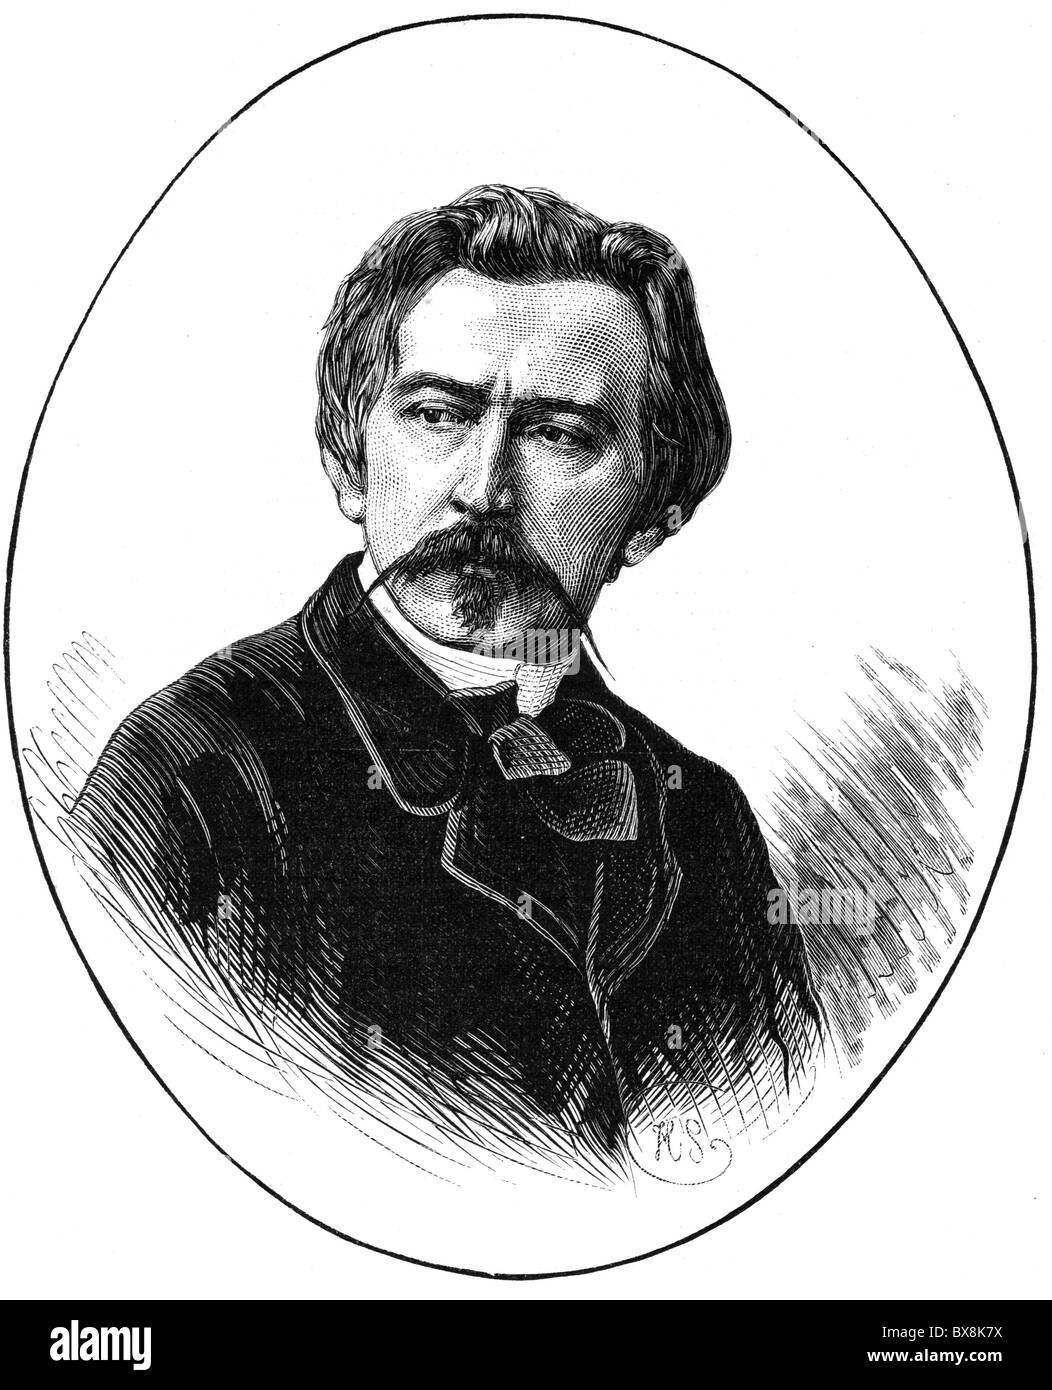 Koenig, Herbert, 1820 - 13.6.1876, German painter, portrait, wood engraving after photo by W. Berndt, Stock Photo